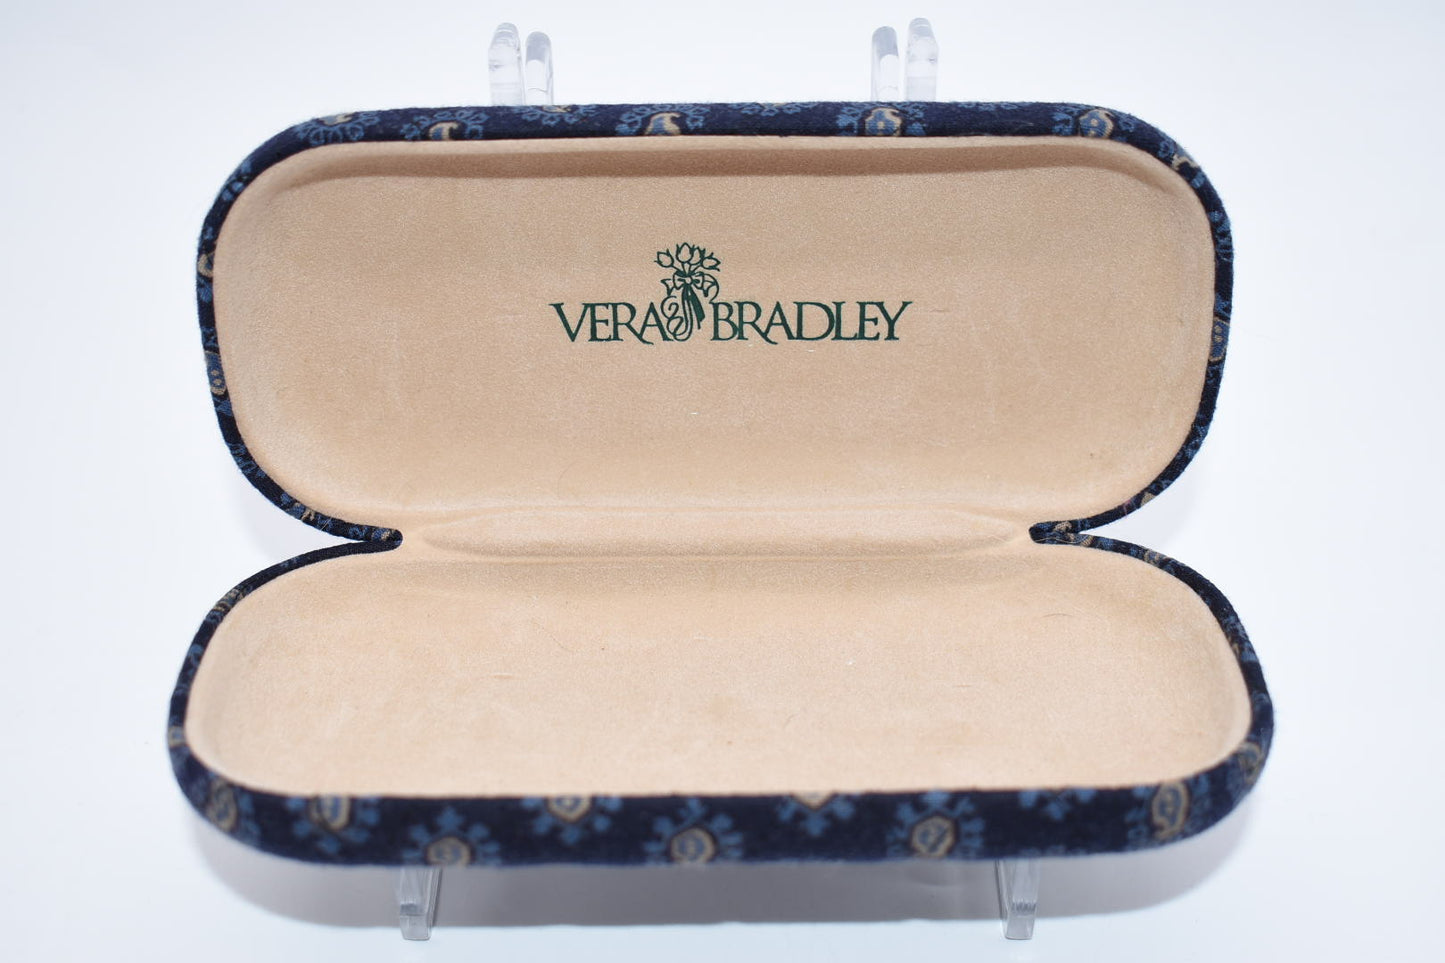 Vera Bradley Hard Eyeglass Case in "Classic Navy -1998" Pattern